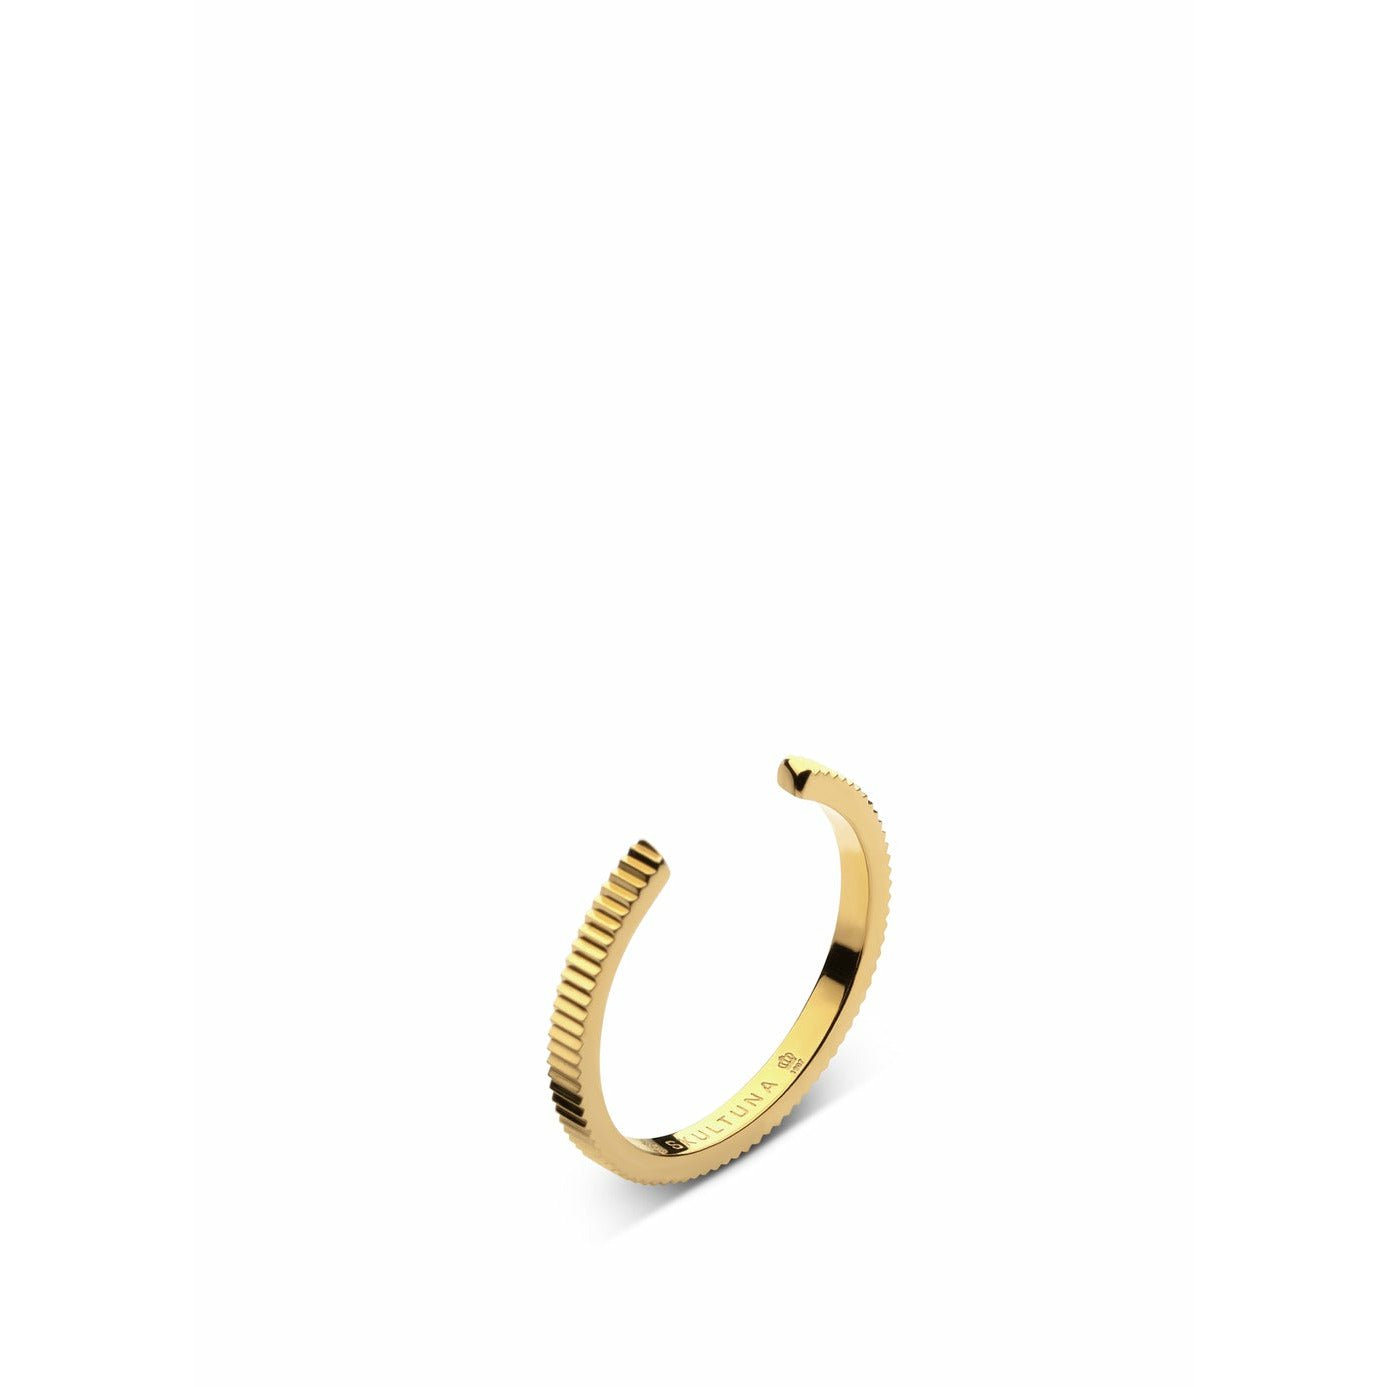 Skultuna gerippter dünner Ring mittel 316 l Stahl Gold plattiert, Ø1,73 cm